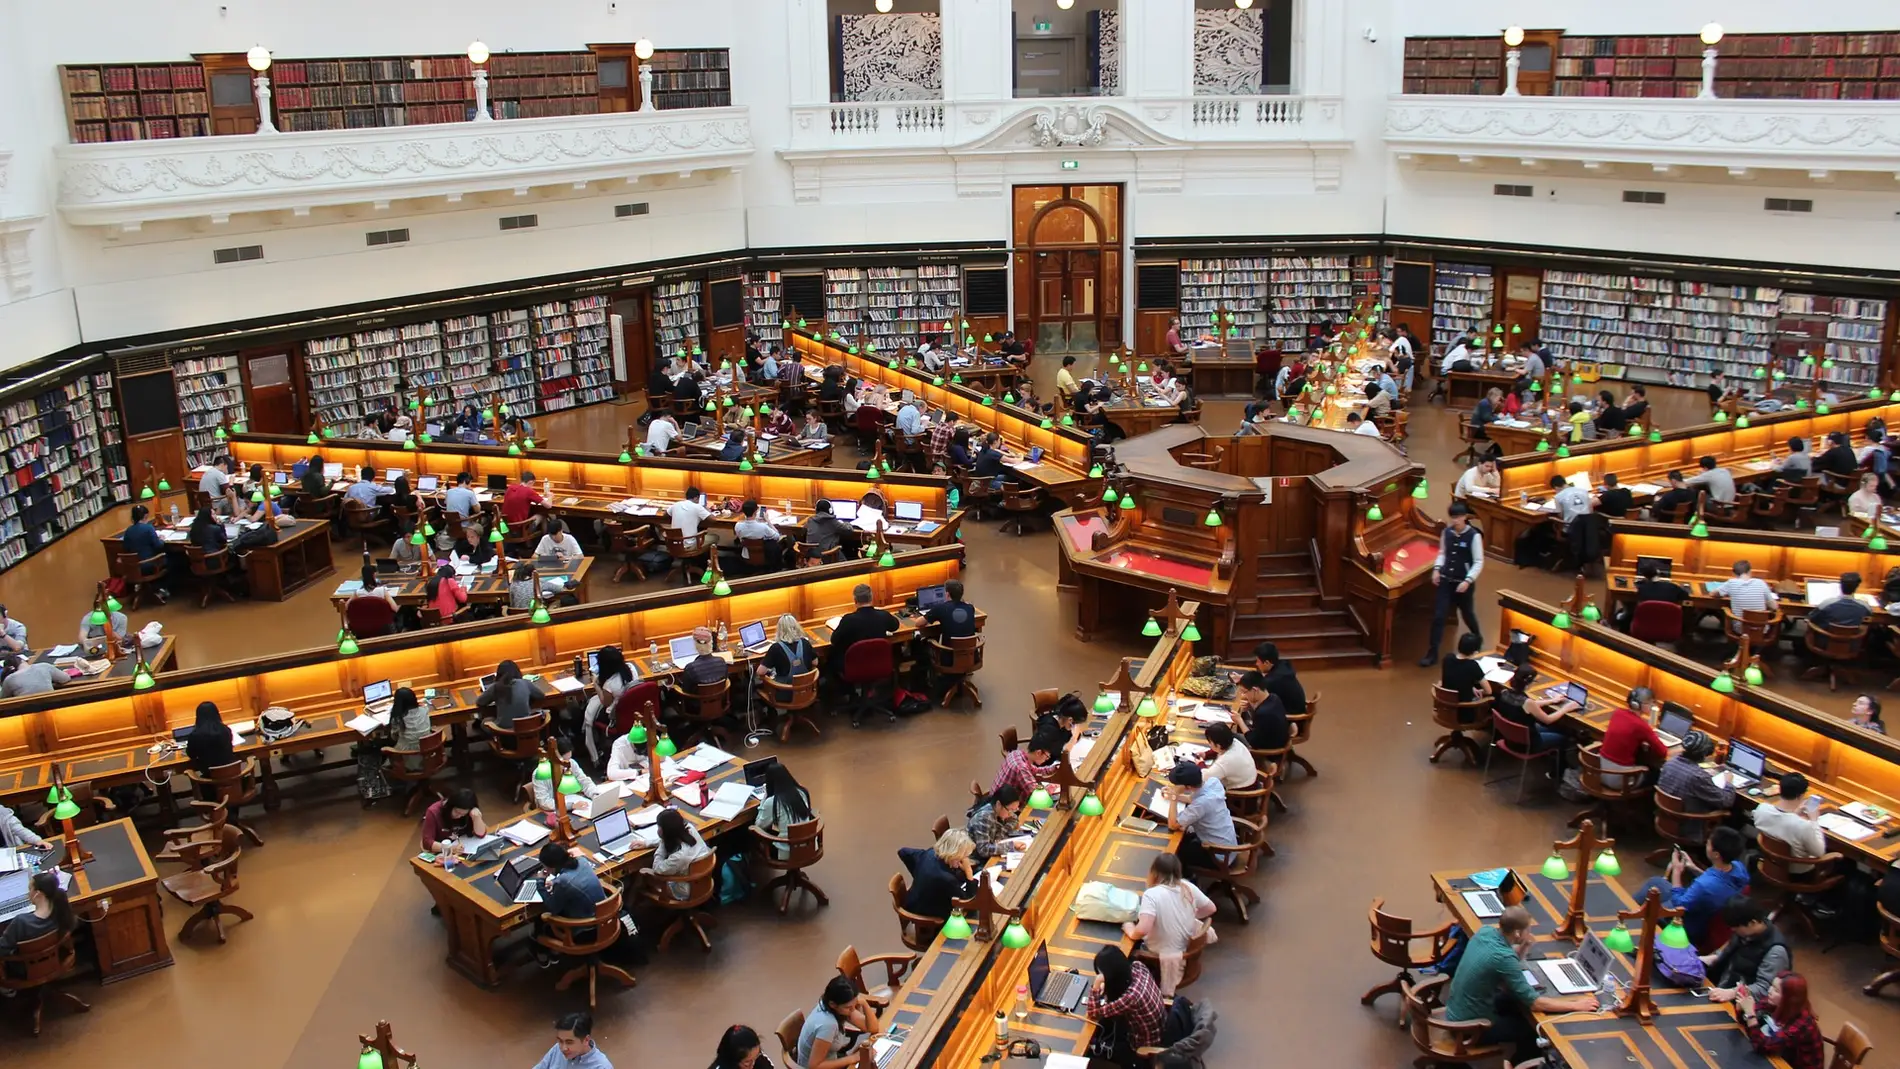 biblioteca universitaria (imagen de archivo)